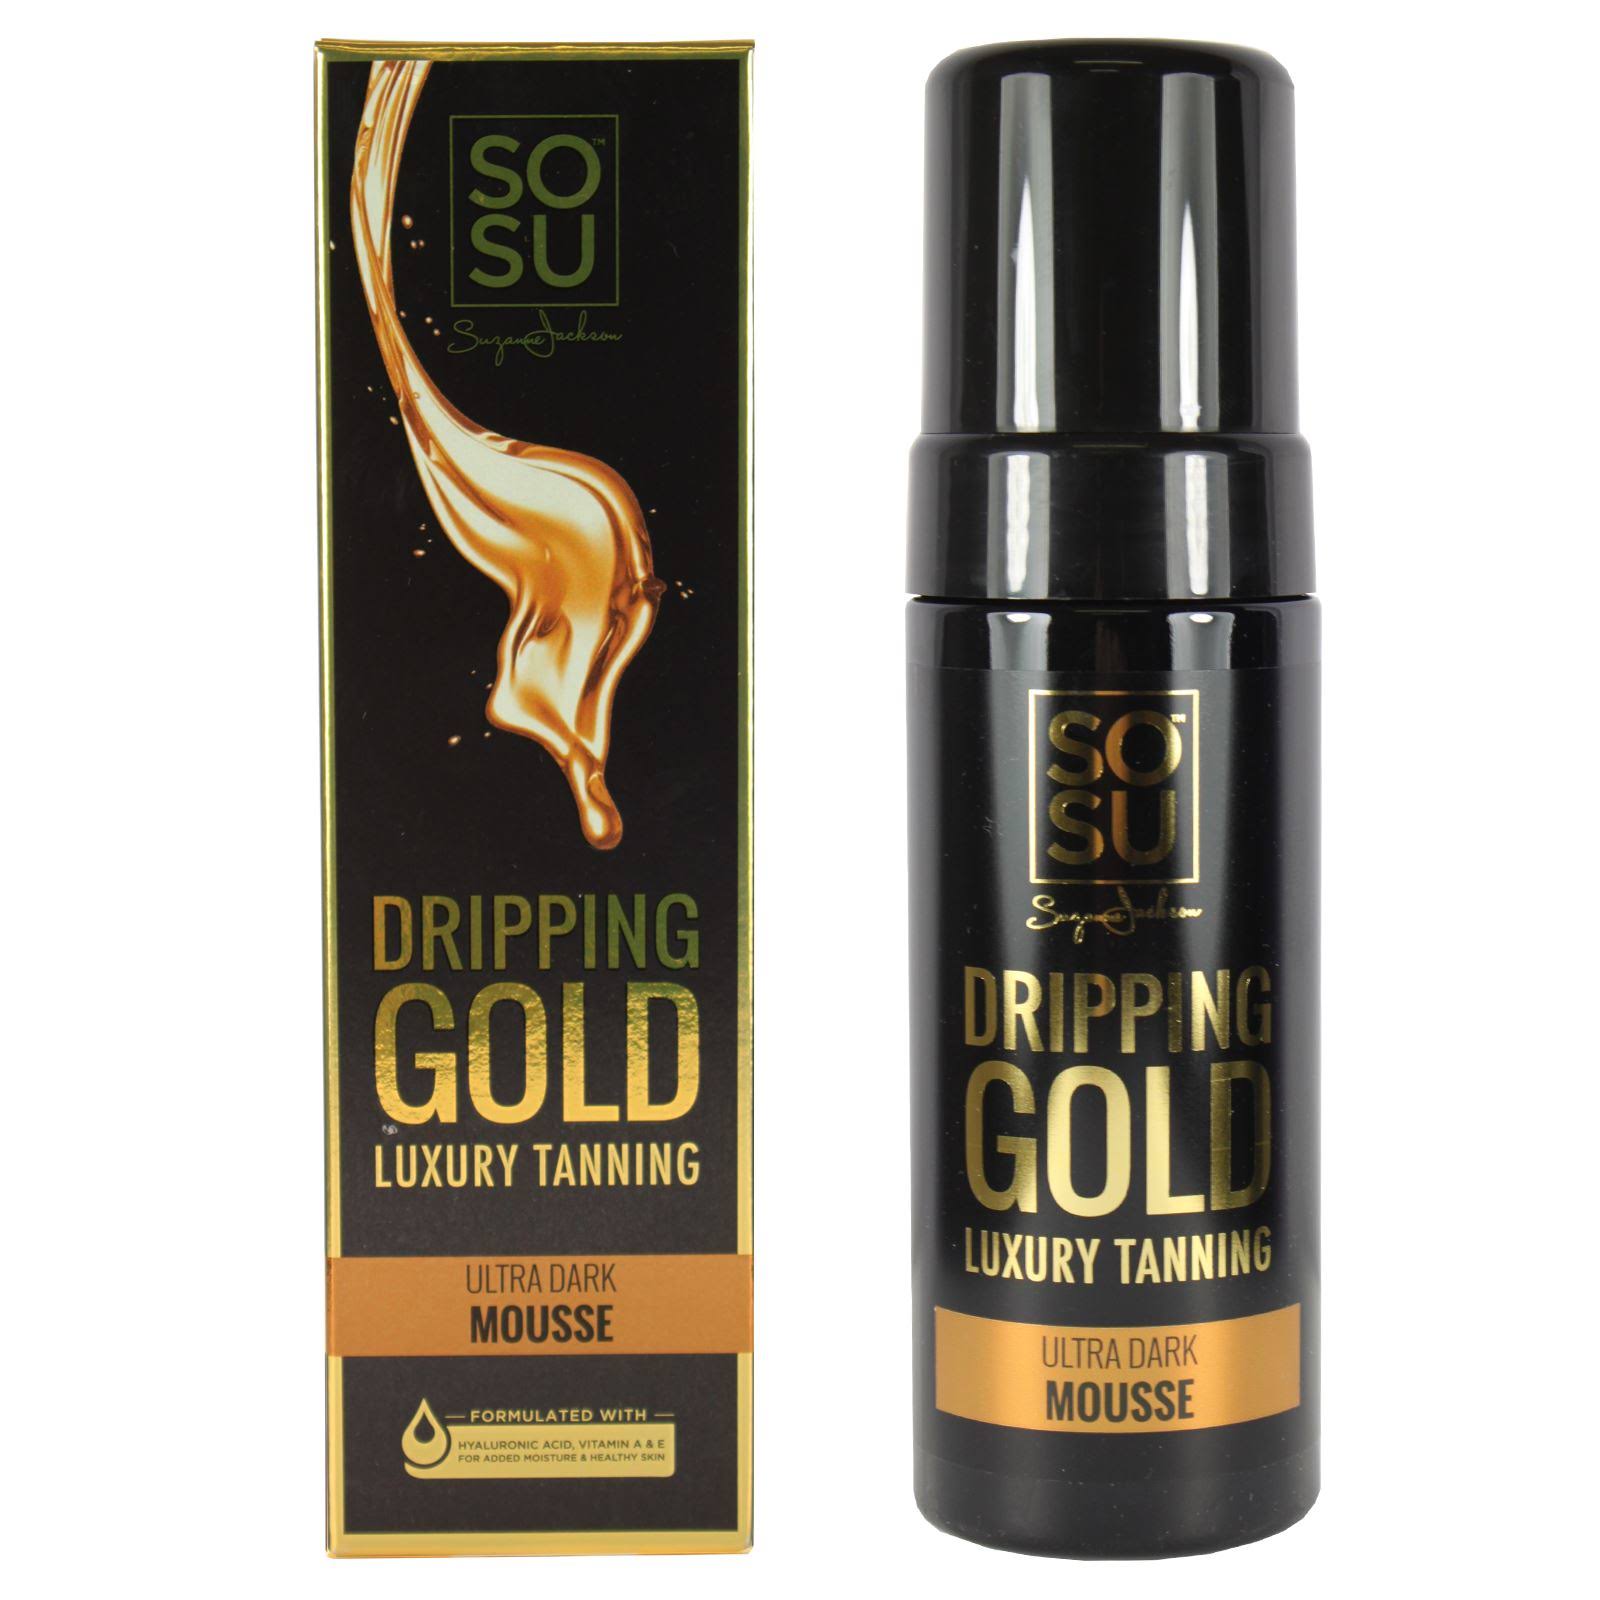 Dripping Gold Luxury Tanning Mousse |SoSu Ultra Dark